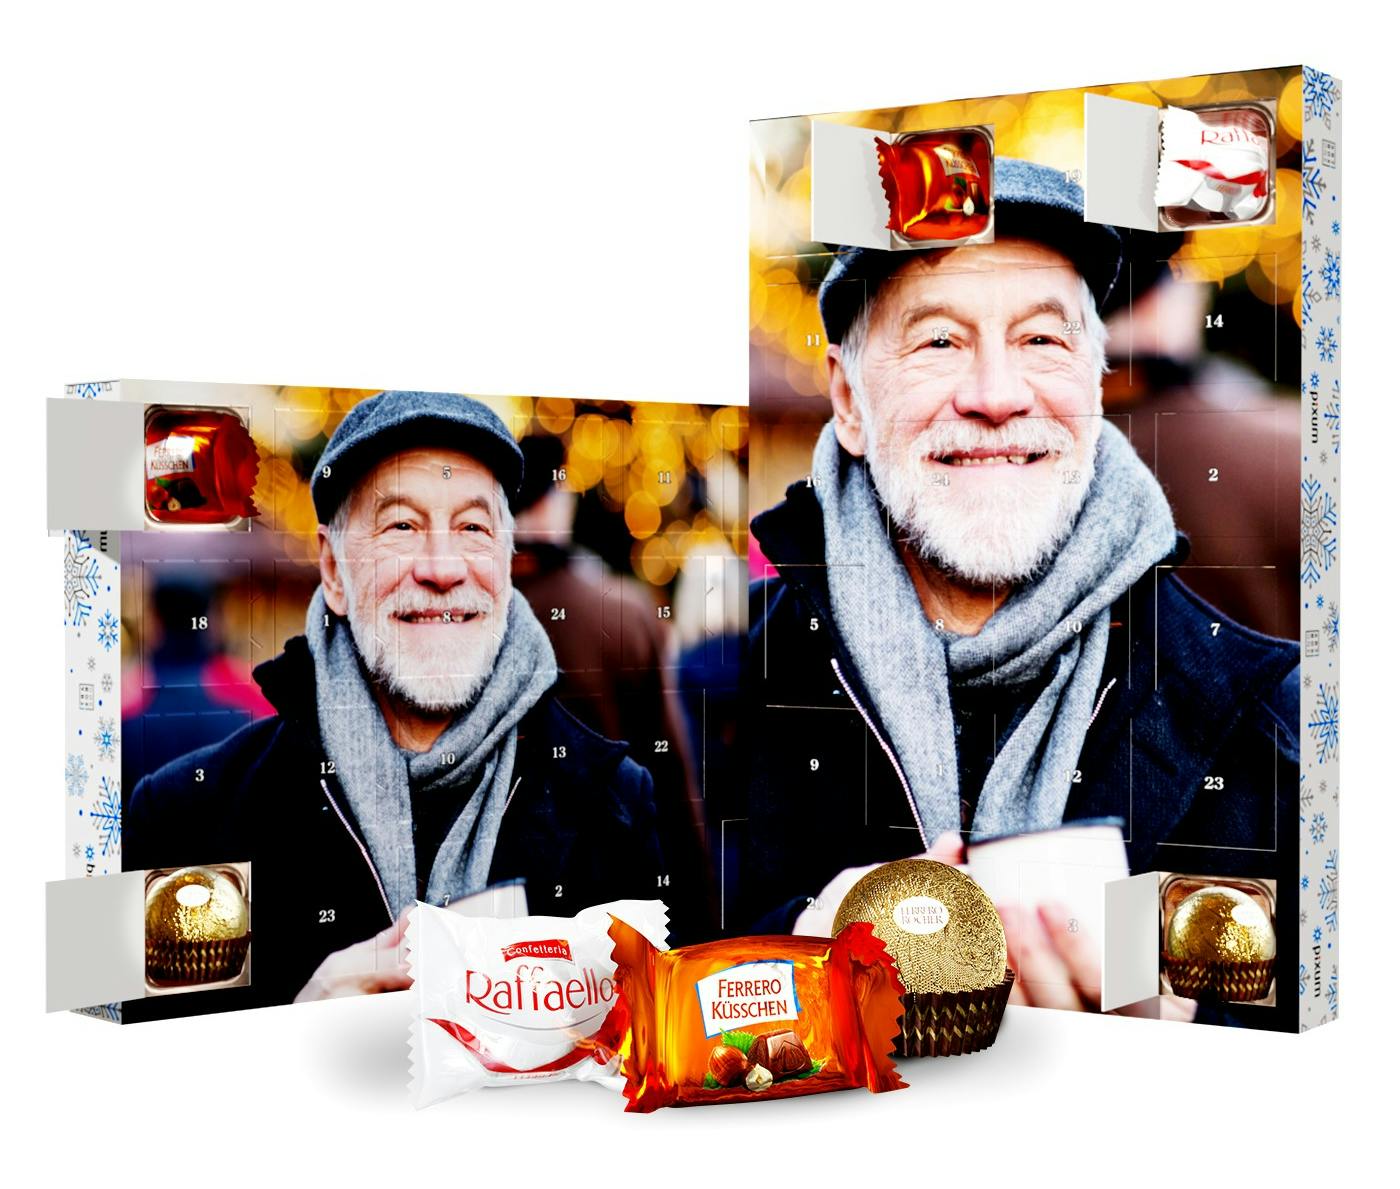 Julekalender med chokolade fra Ferrero, coveret er printet med en ældre man der smiler